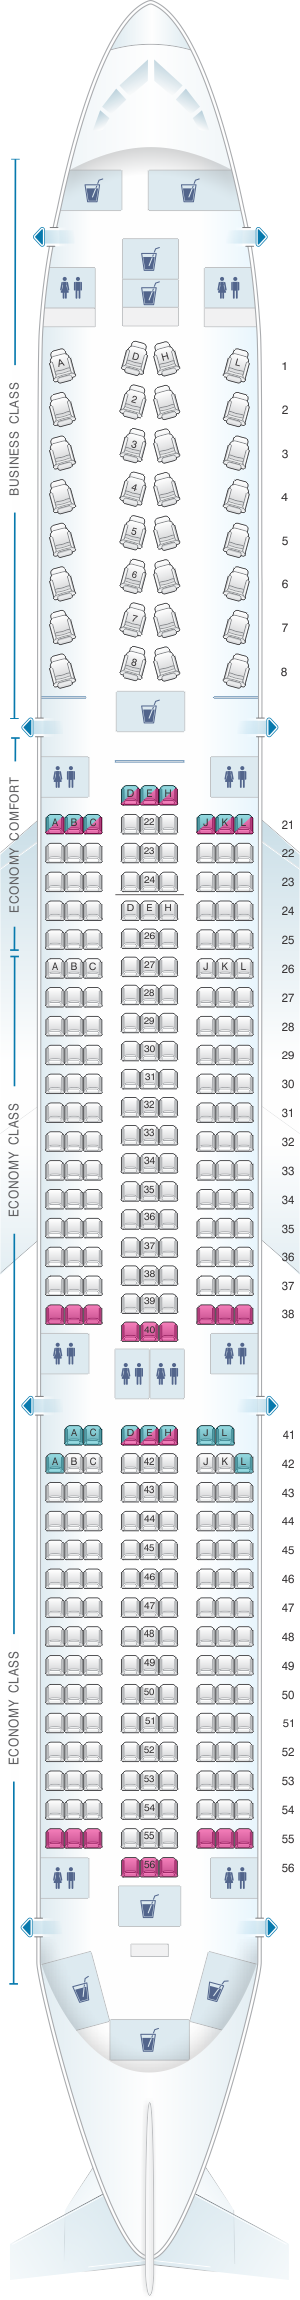 Seat map for Finnair Airbus A350 900 Config.2